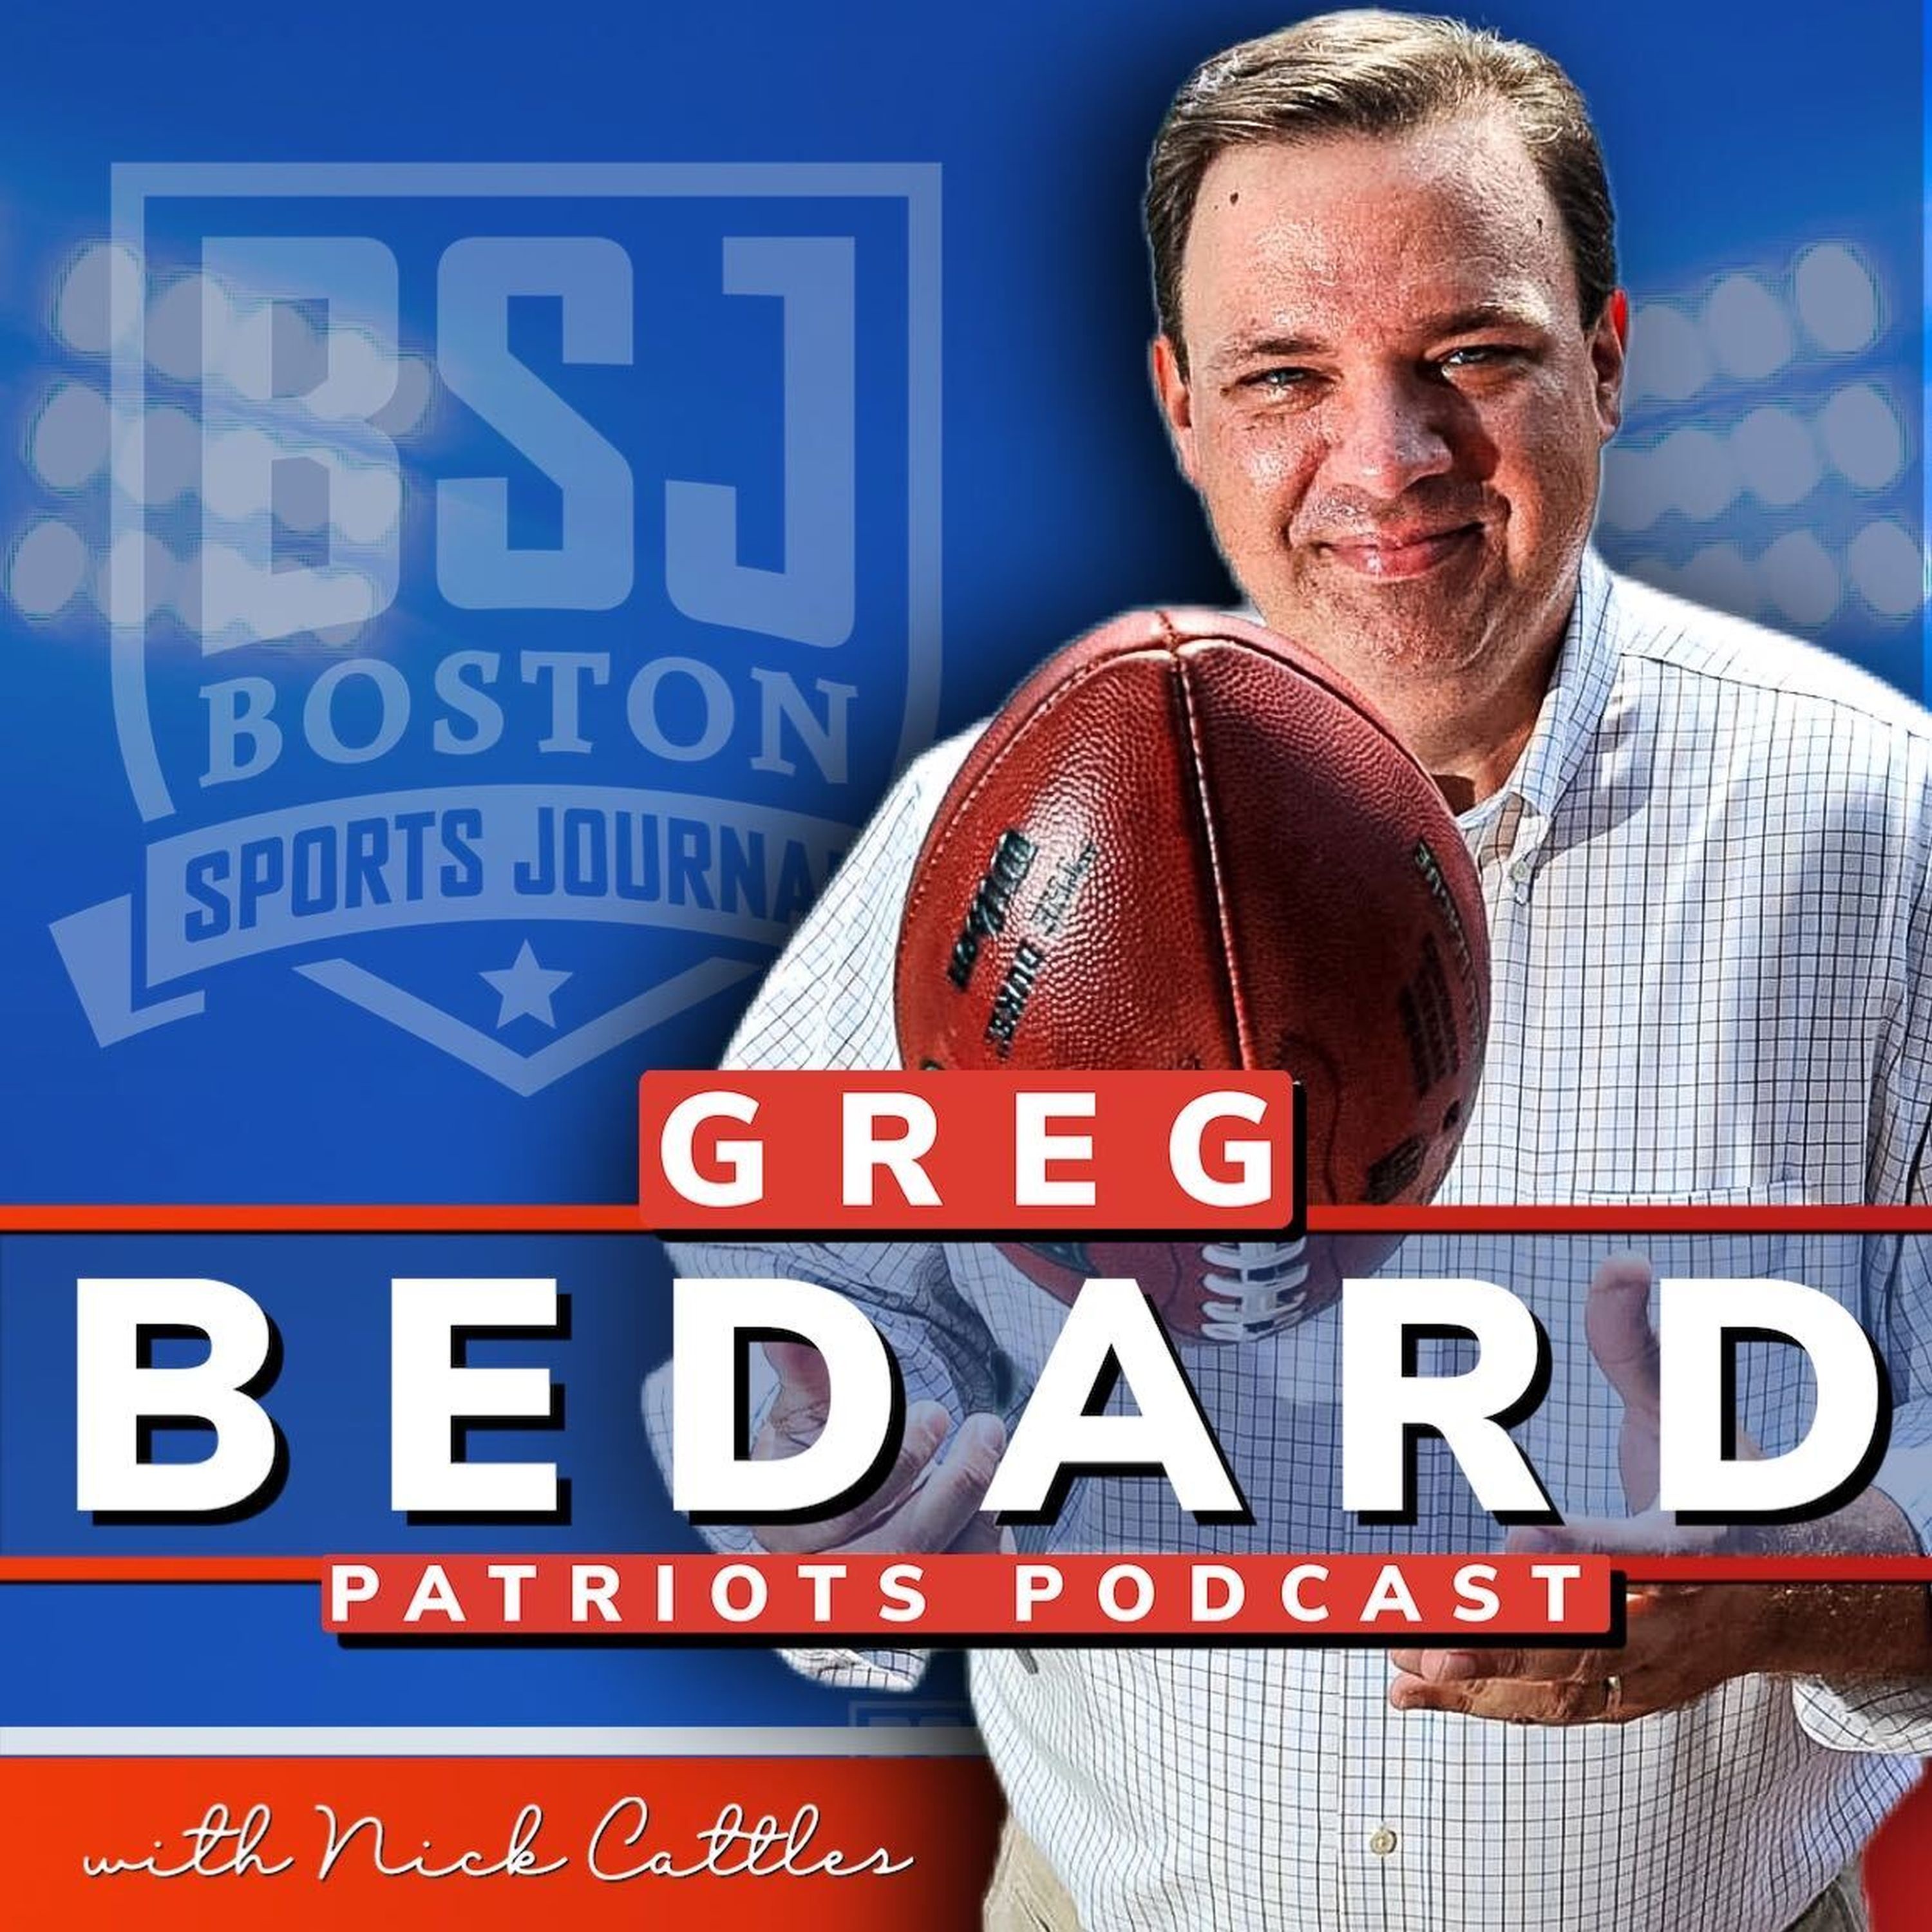 Greg Cosell breaks down Patriots QB candidates